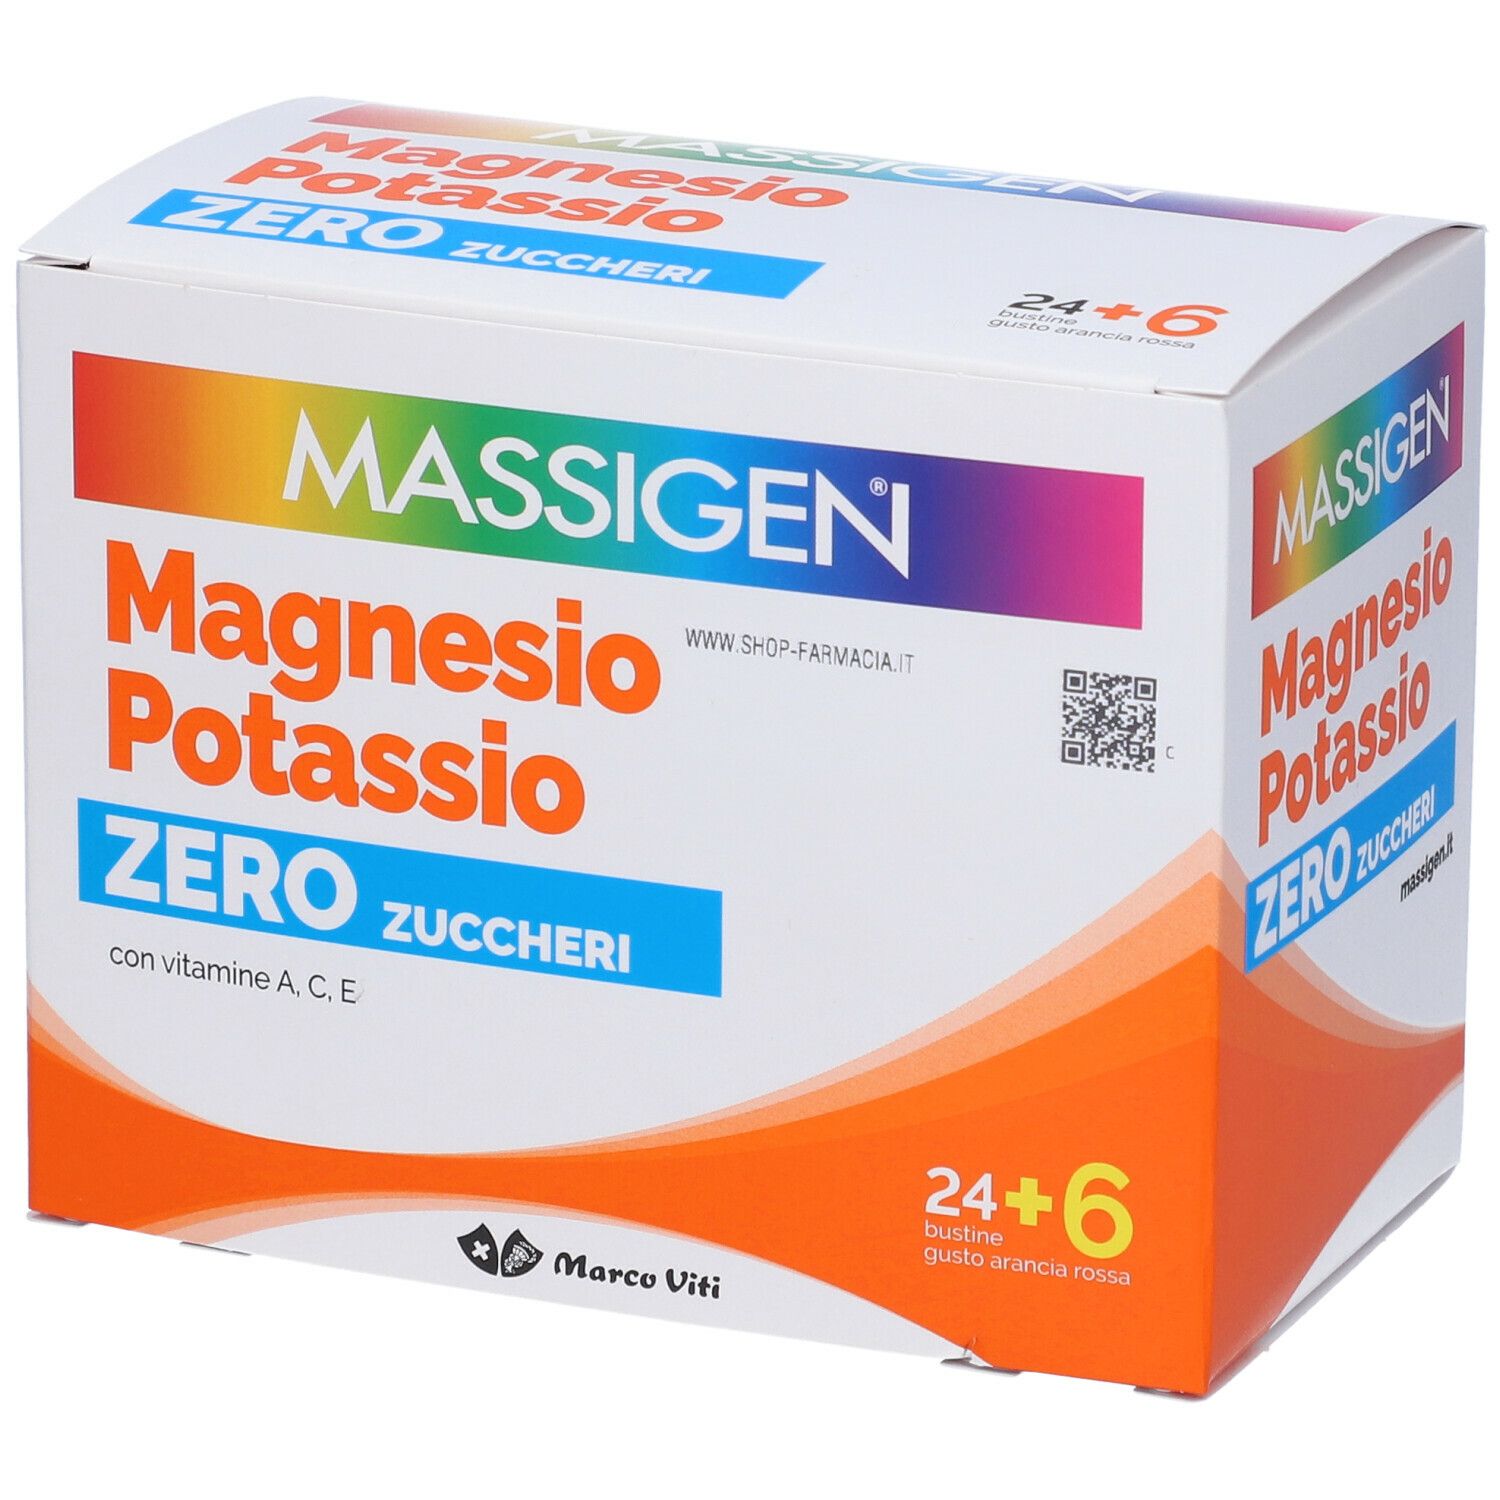 Image of MASSIGEN® Magnesio e Potassio Zero Zuccheri